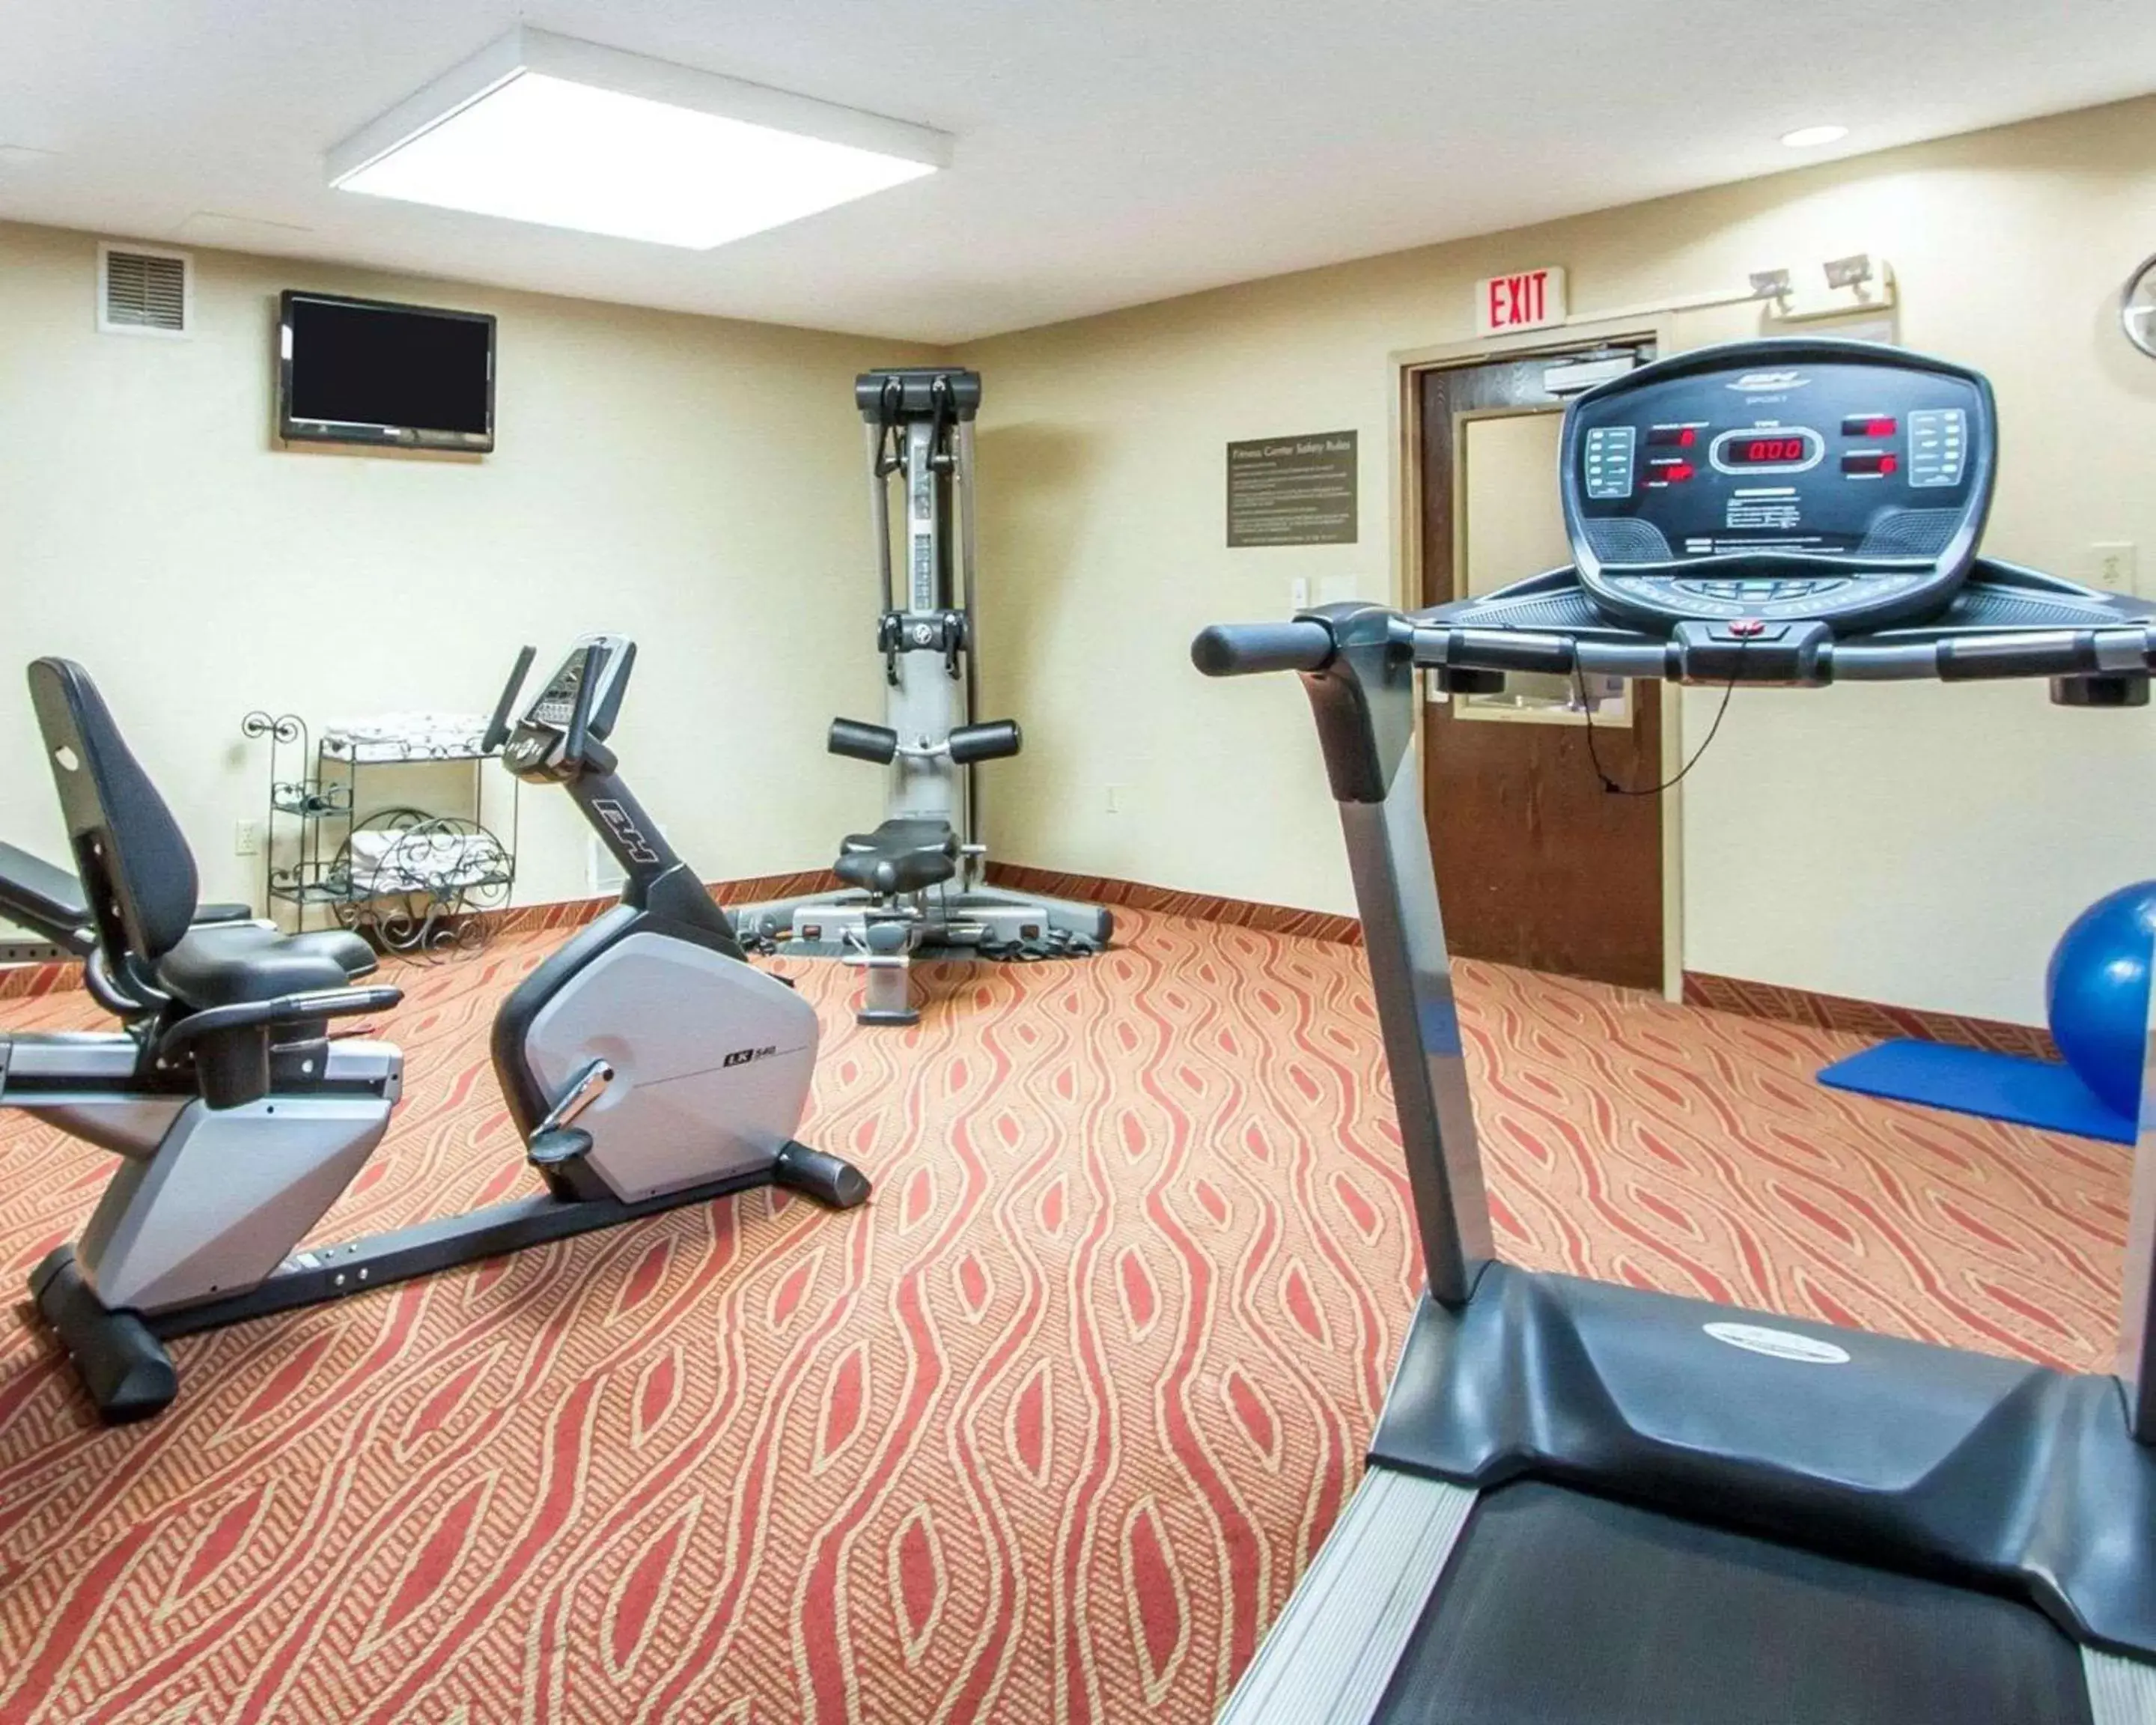 Fitness centre/facilities, Fitness Center/Facilities in Comfort Inn Poplar Bluff North